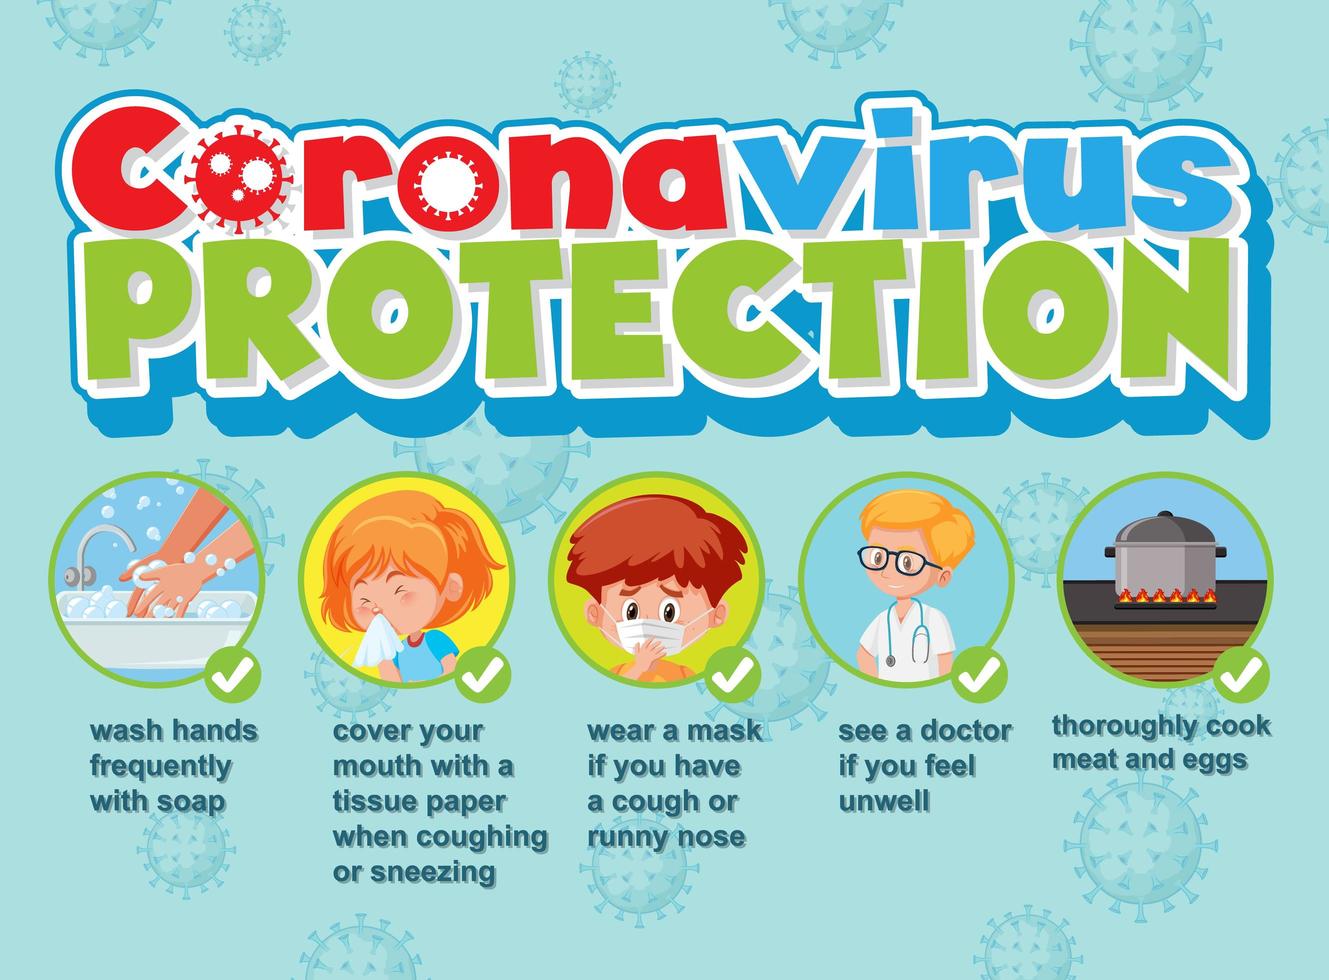 Coronavirus protection poster vector